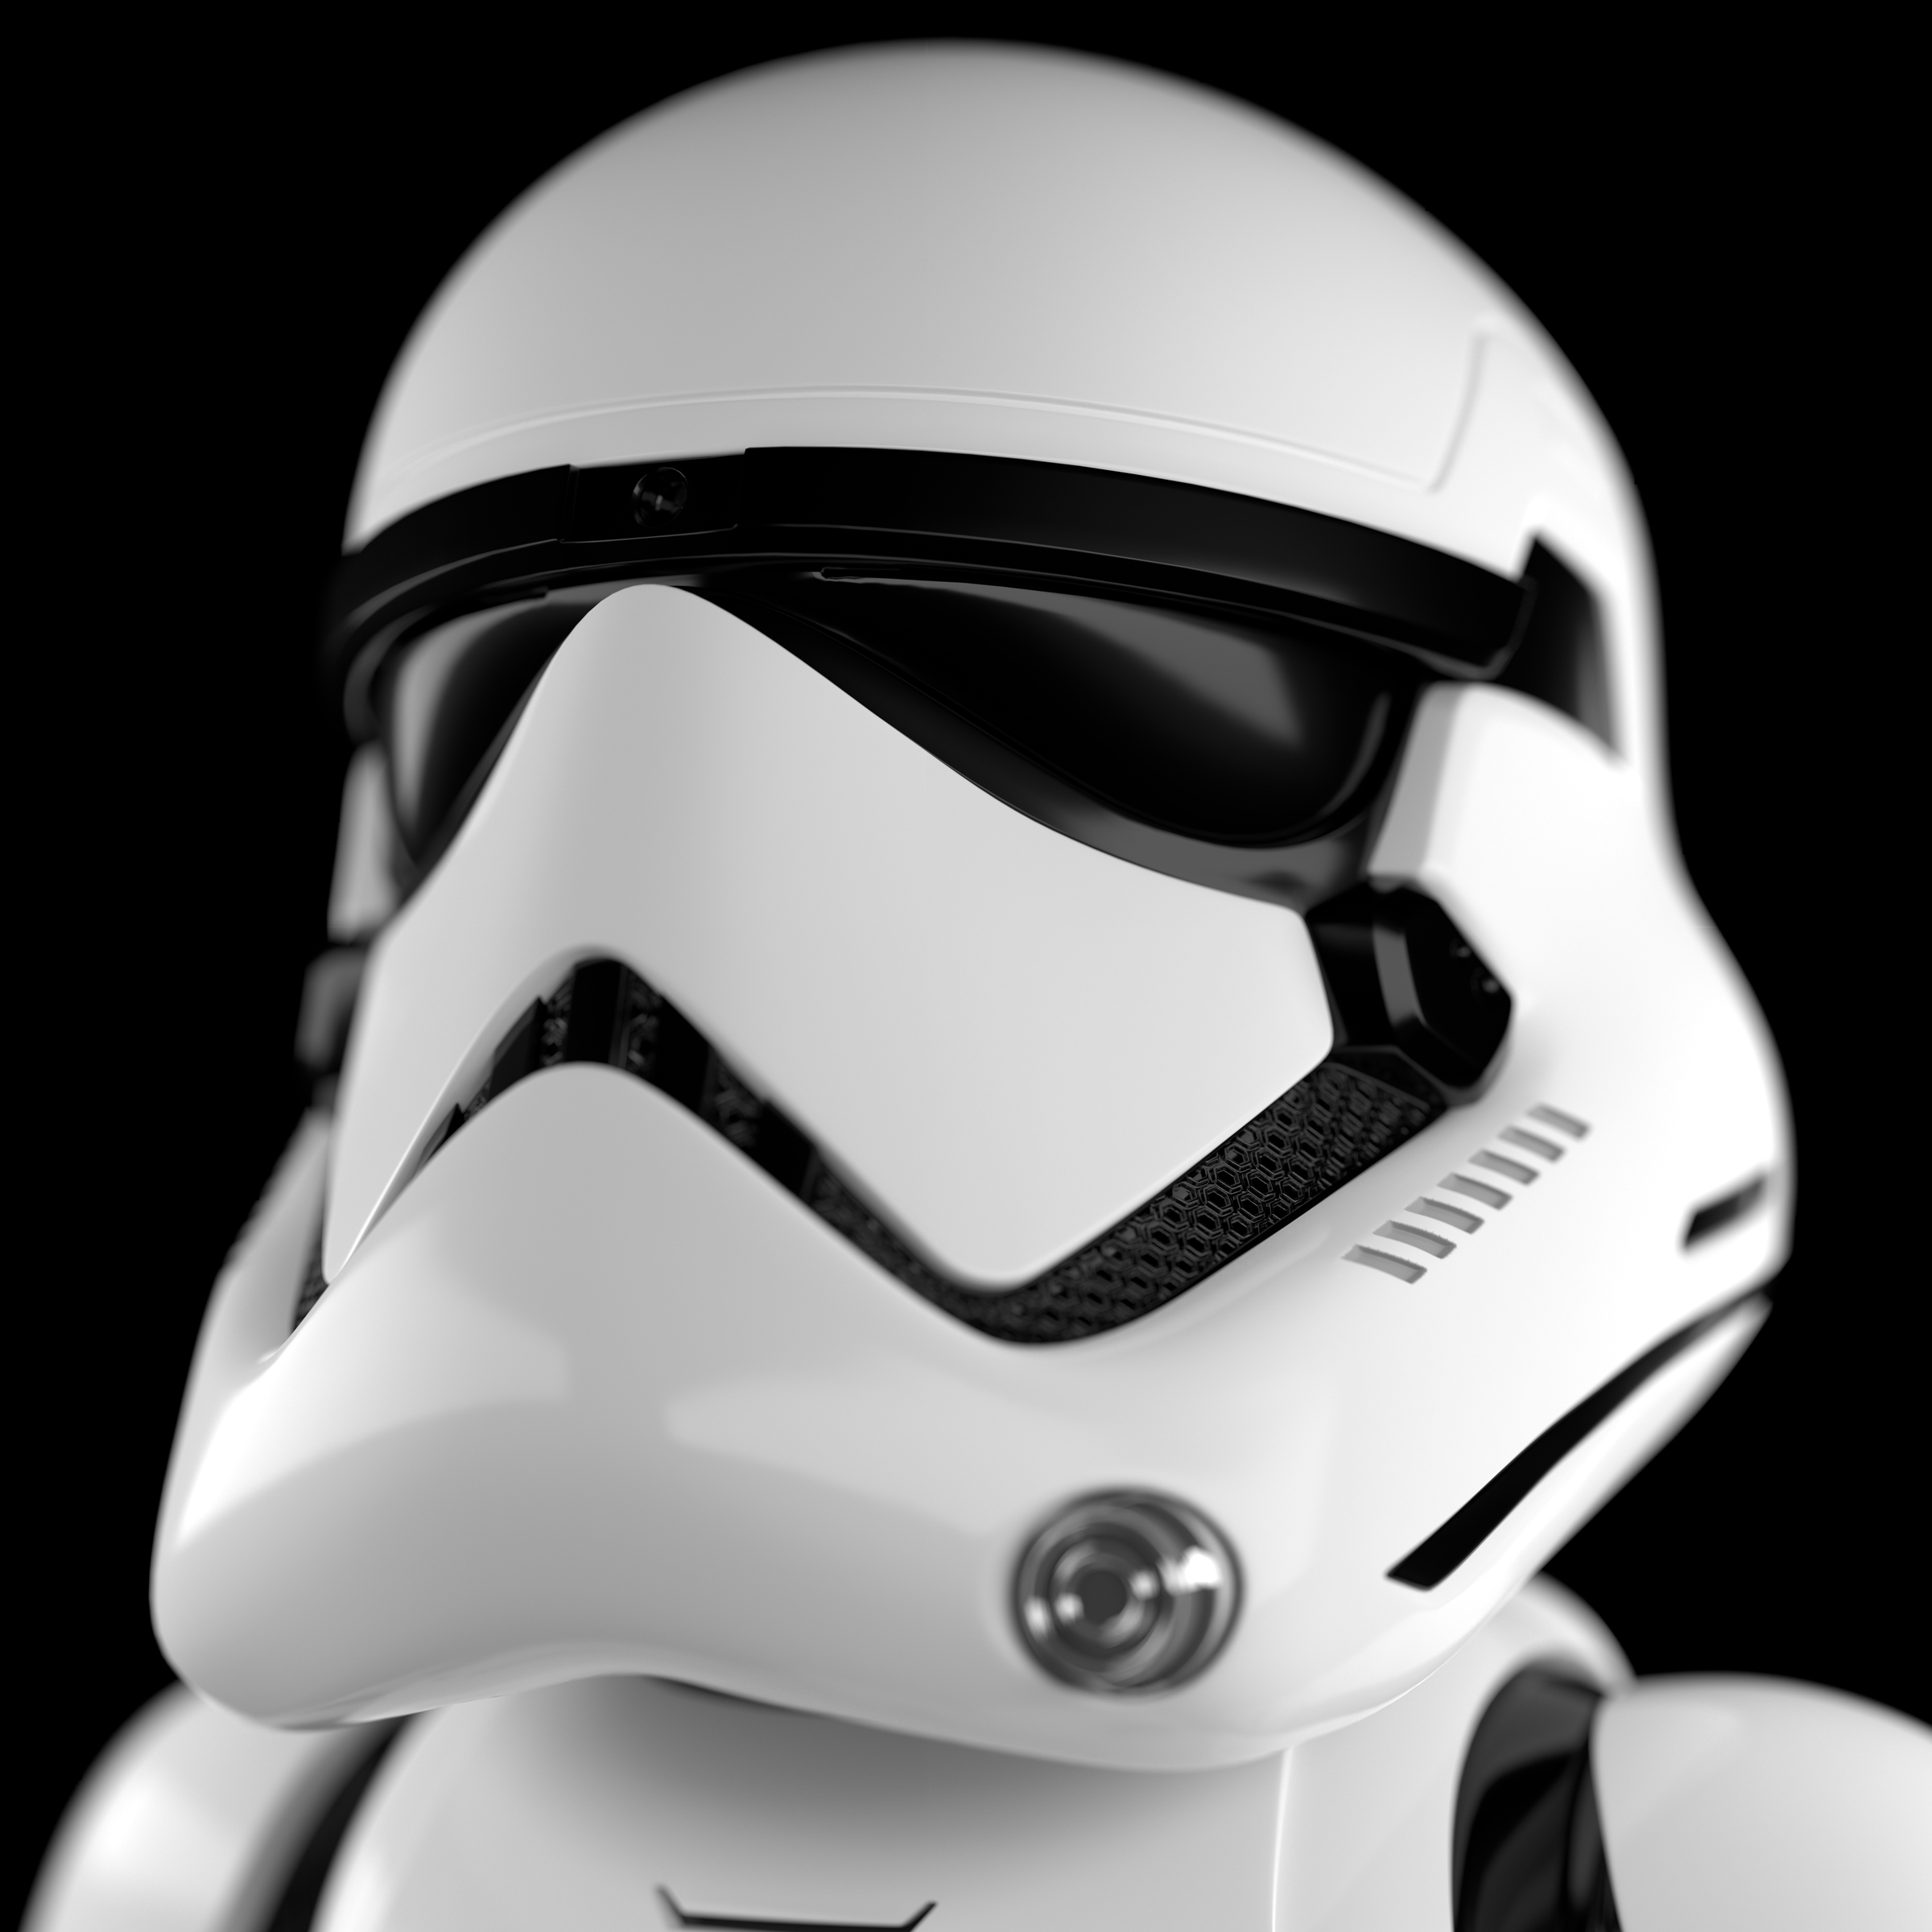 UBTECH Announces Star Wars Stormtrooper Robot with Companion App